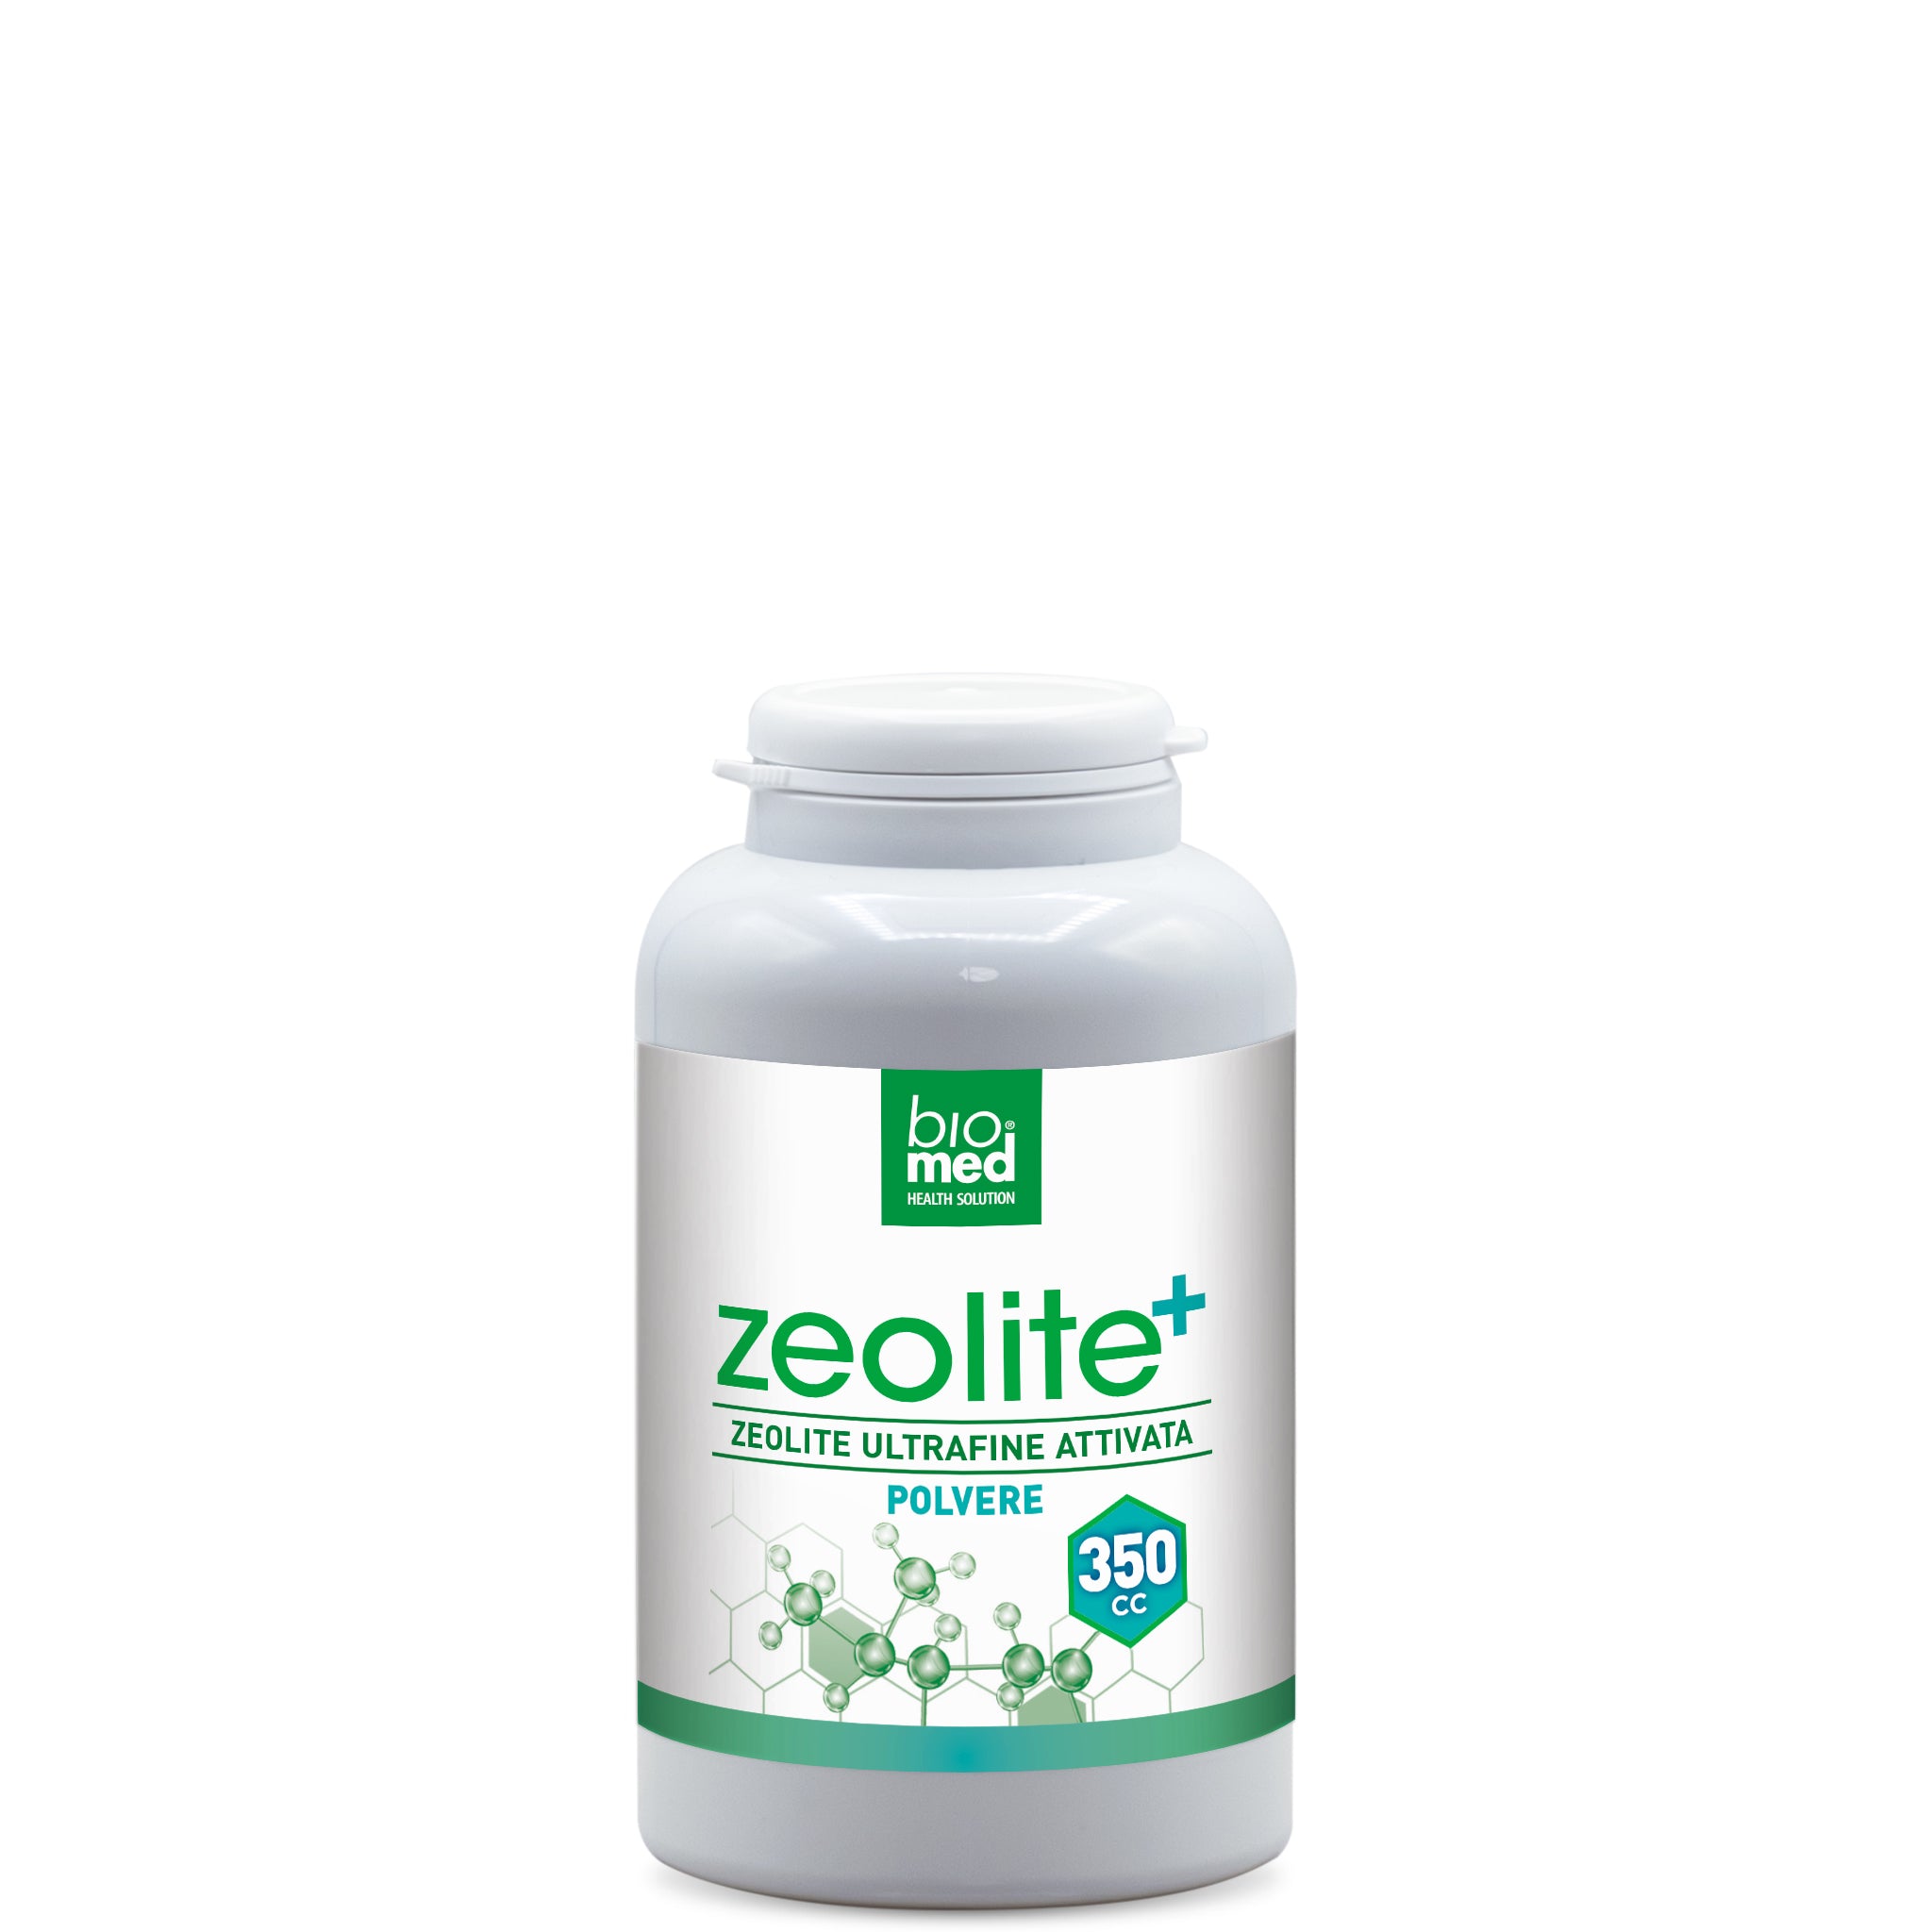 zeolite+ ultrafina attivata - biomed - 350 cc polvere